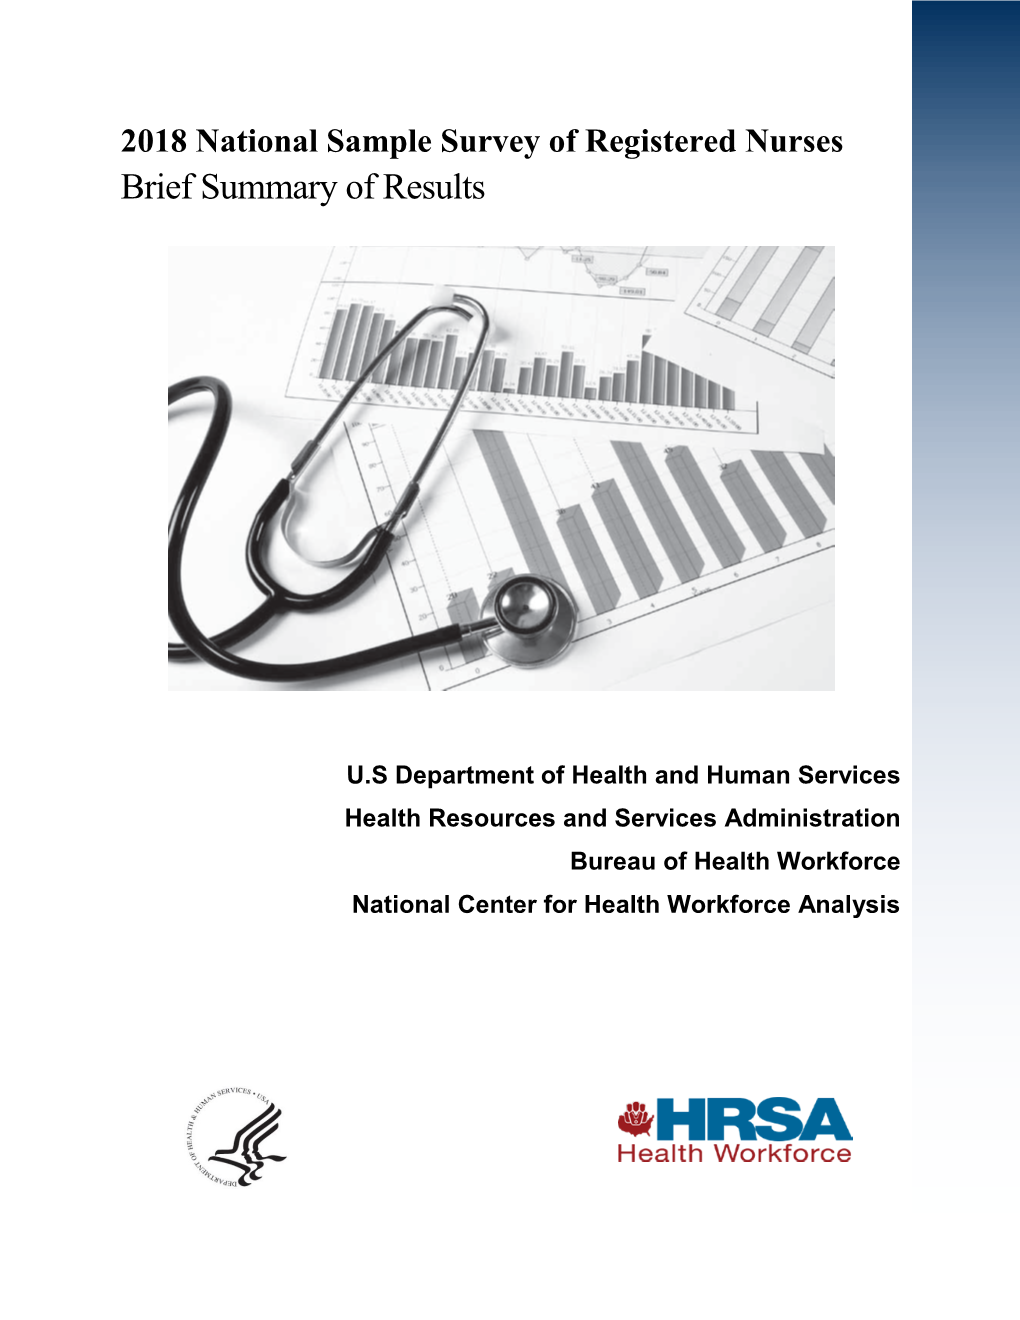 2018 National Sample Survey of Registered Nurses Brief Summary of Results